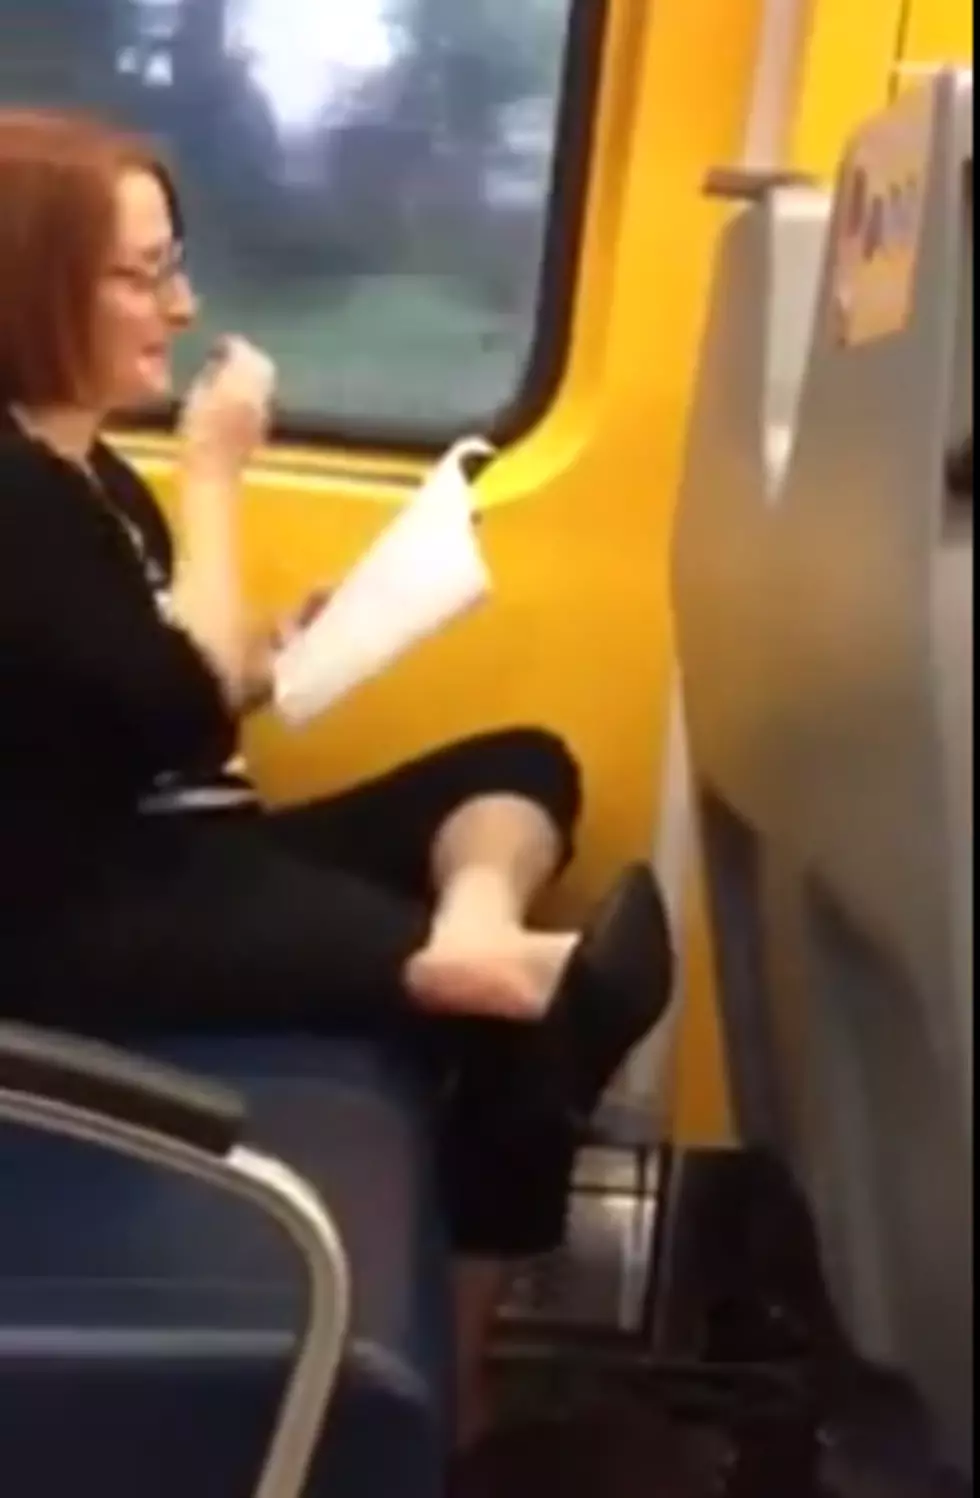 Woman Eats Stuff Off Her Feet on the Train